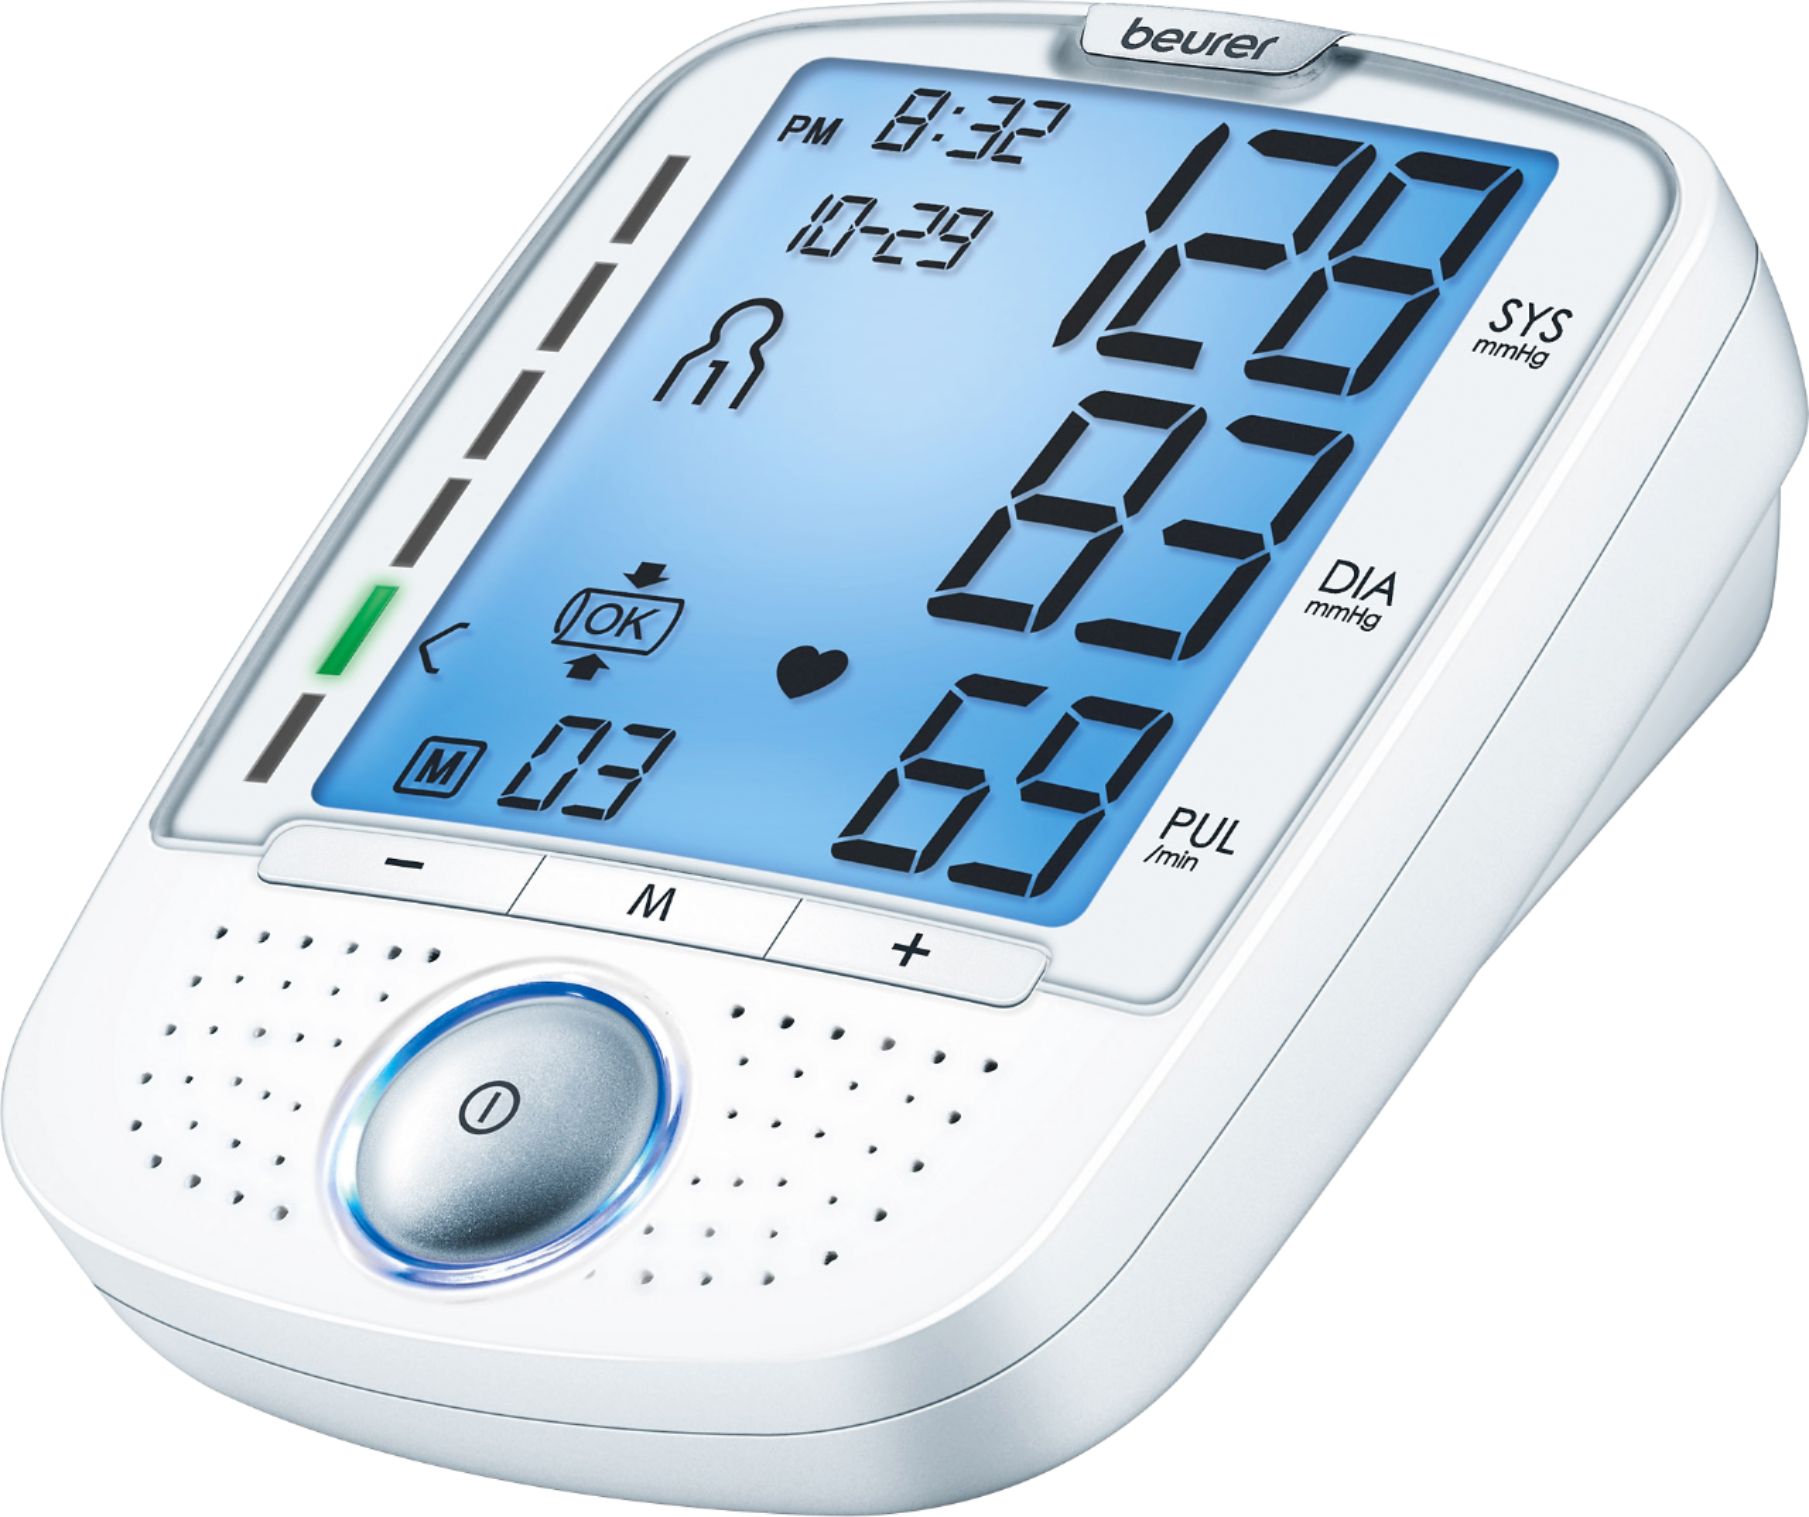 Blood Pressure Machine,Wrist Blood Pressure Monitor Digital Automatic BP Cuff Monitors Purple with Irregular Heartbeat Detection Large Display 120